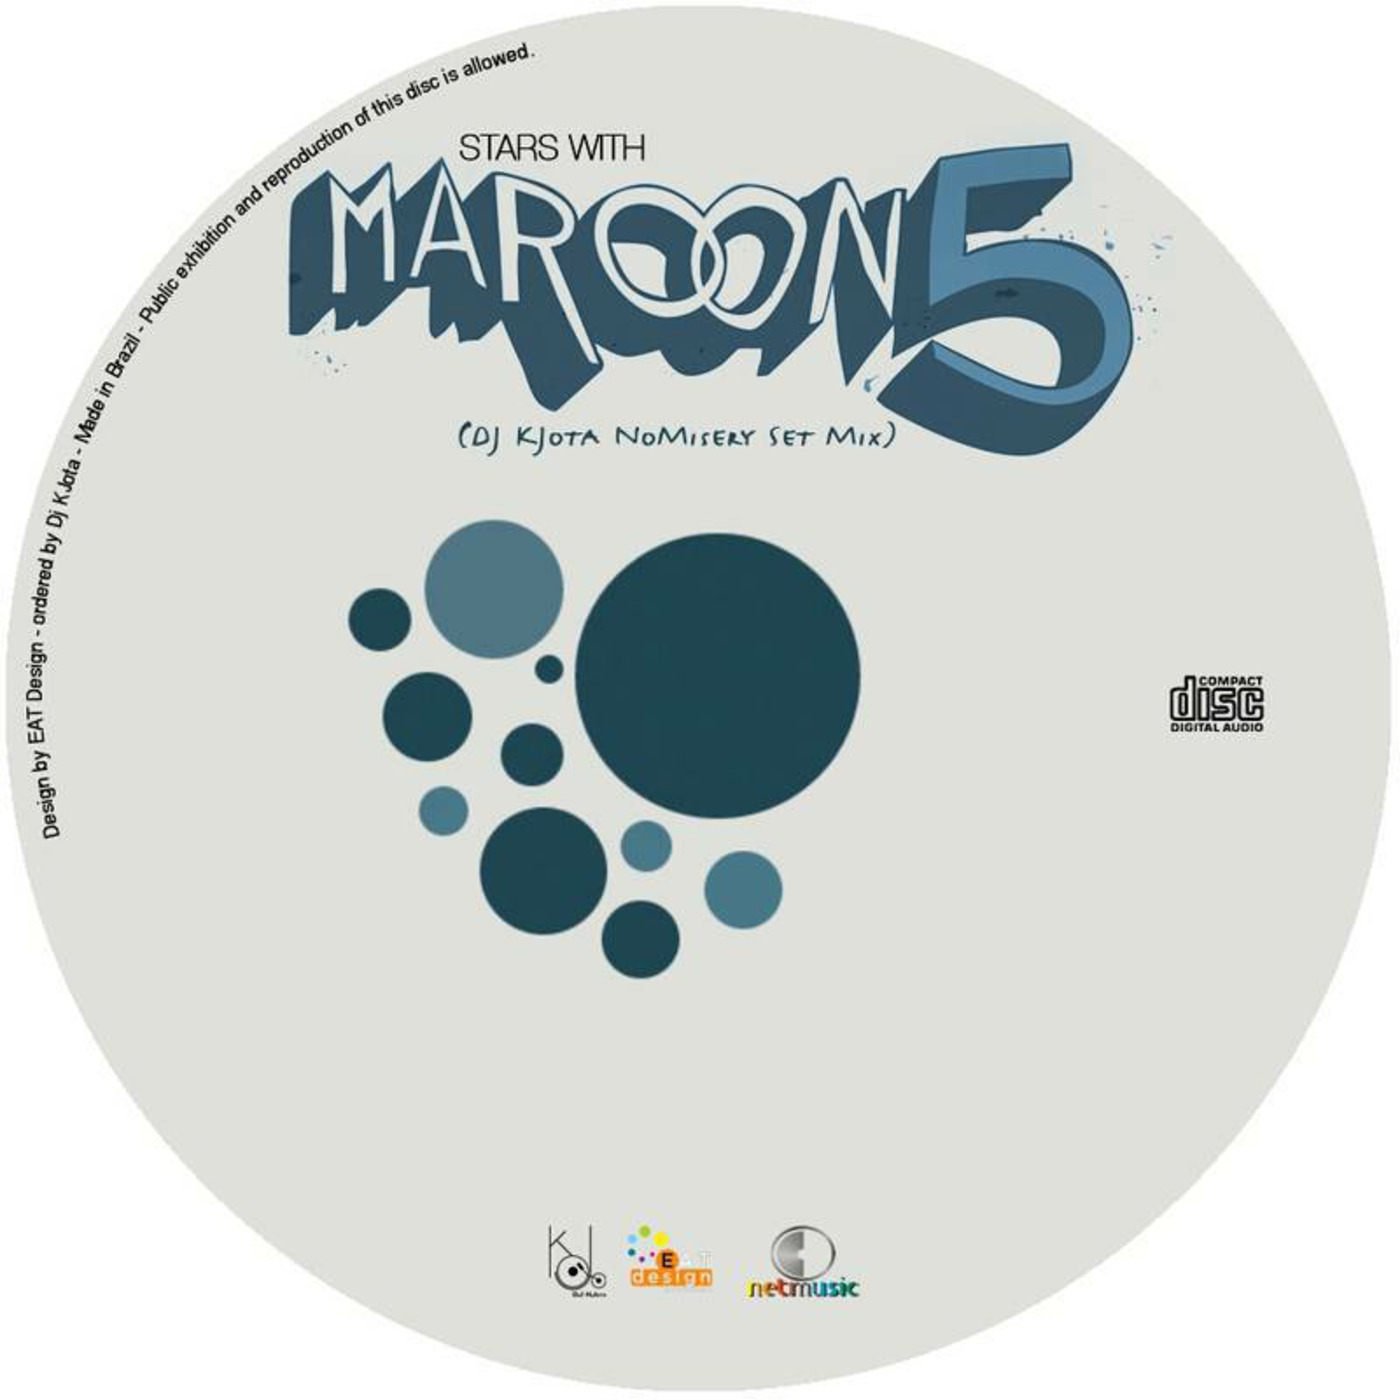 Stars With Maroon 5 (DJ KJota NoMisery Set Mix)